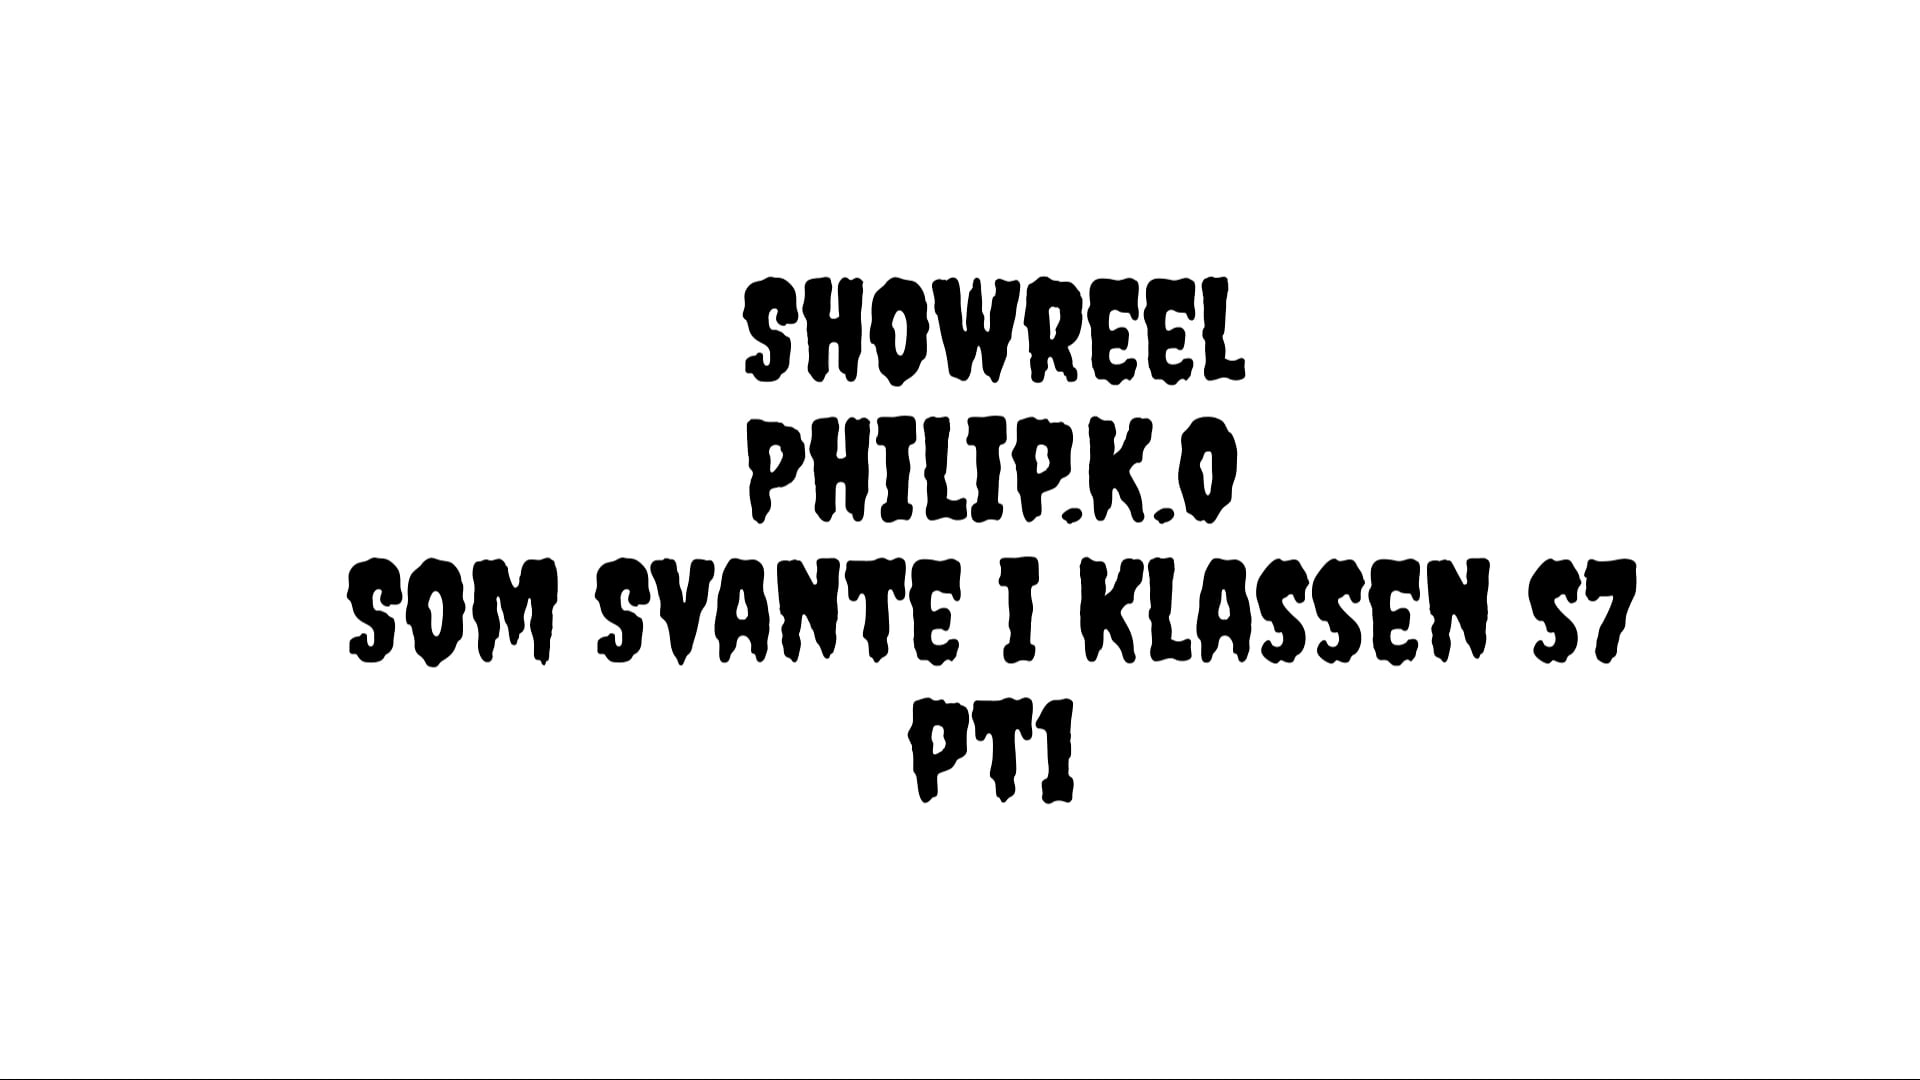 Philip.K.O showreel.pt1